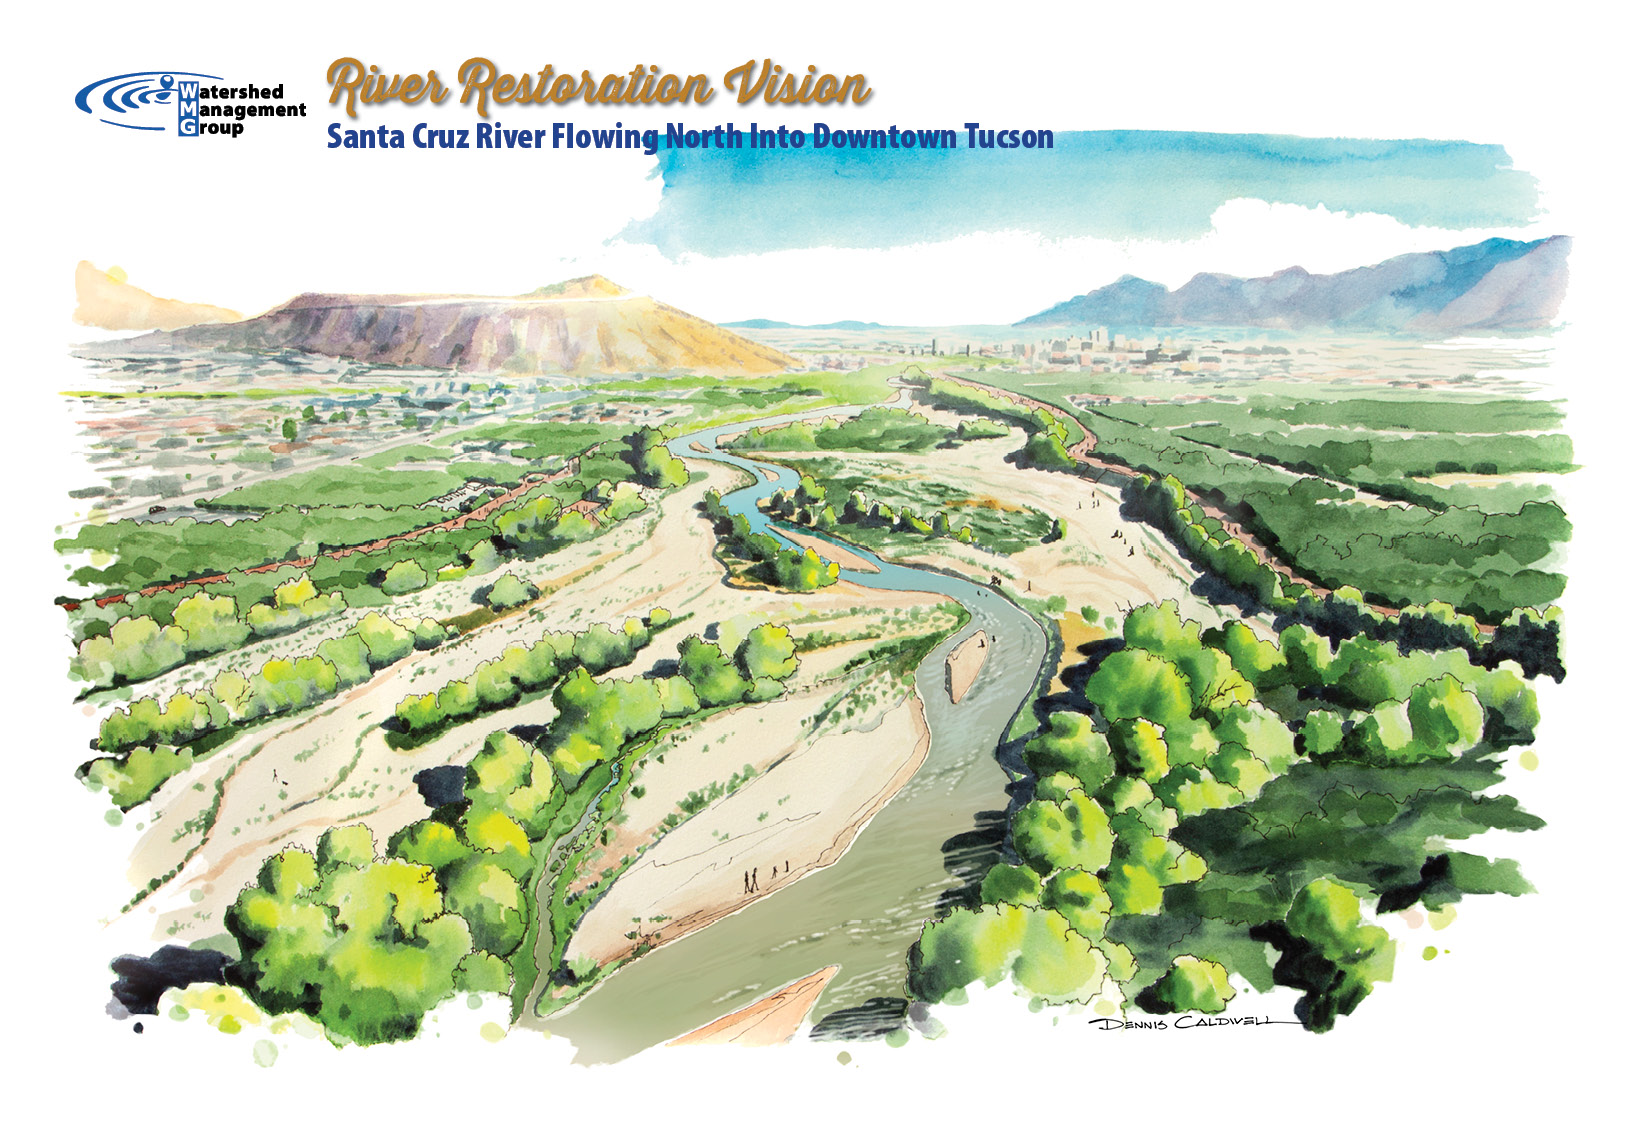 River restoration vision - Santa Cruz River Flowing north into downtown Tucson